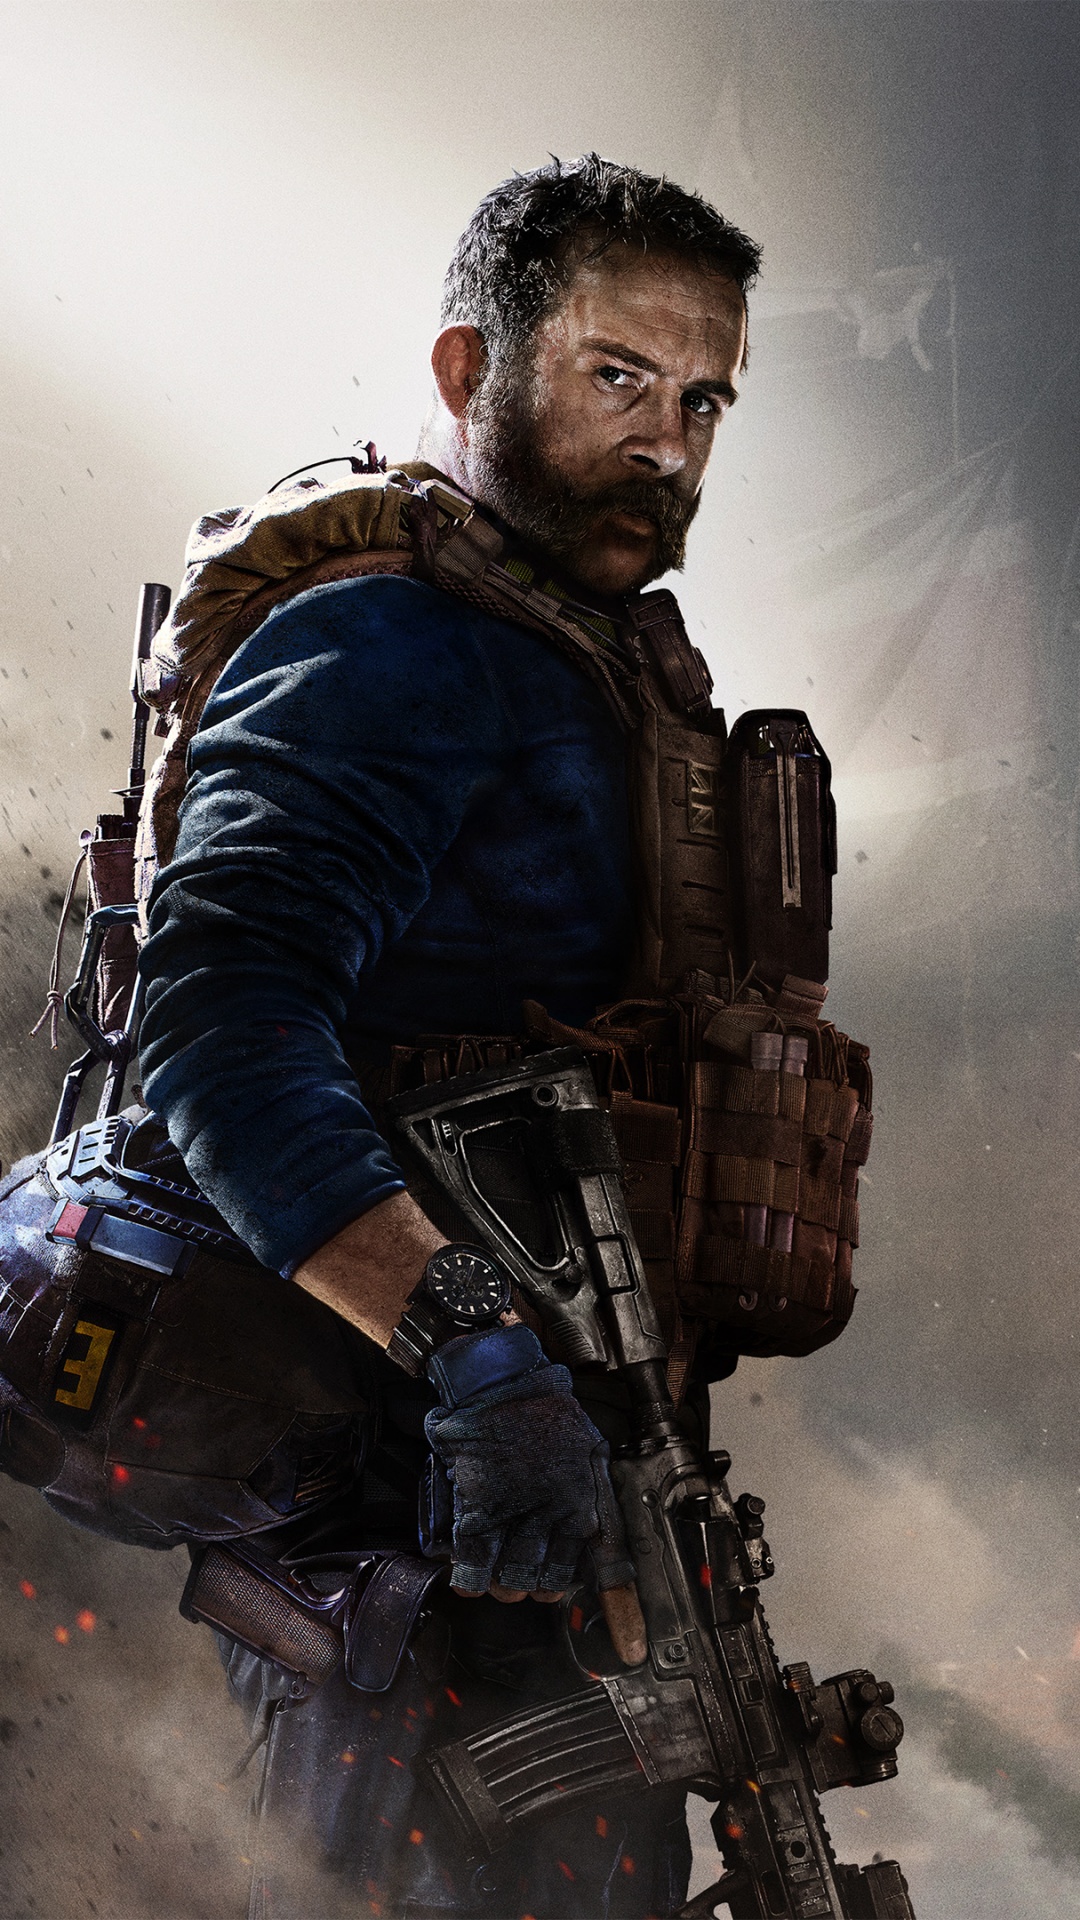 Call of Duty: Modern Warfare 4K Wallpaper, PlayStation 4, Xbox One, PC